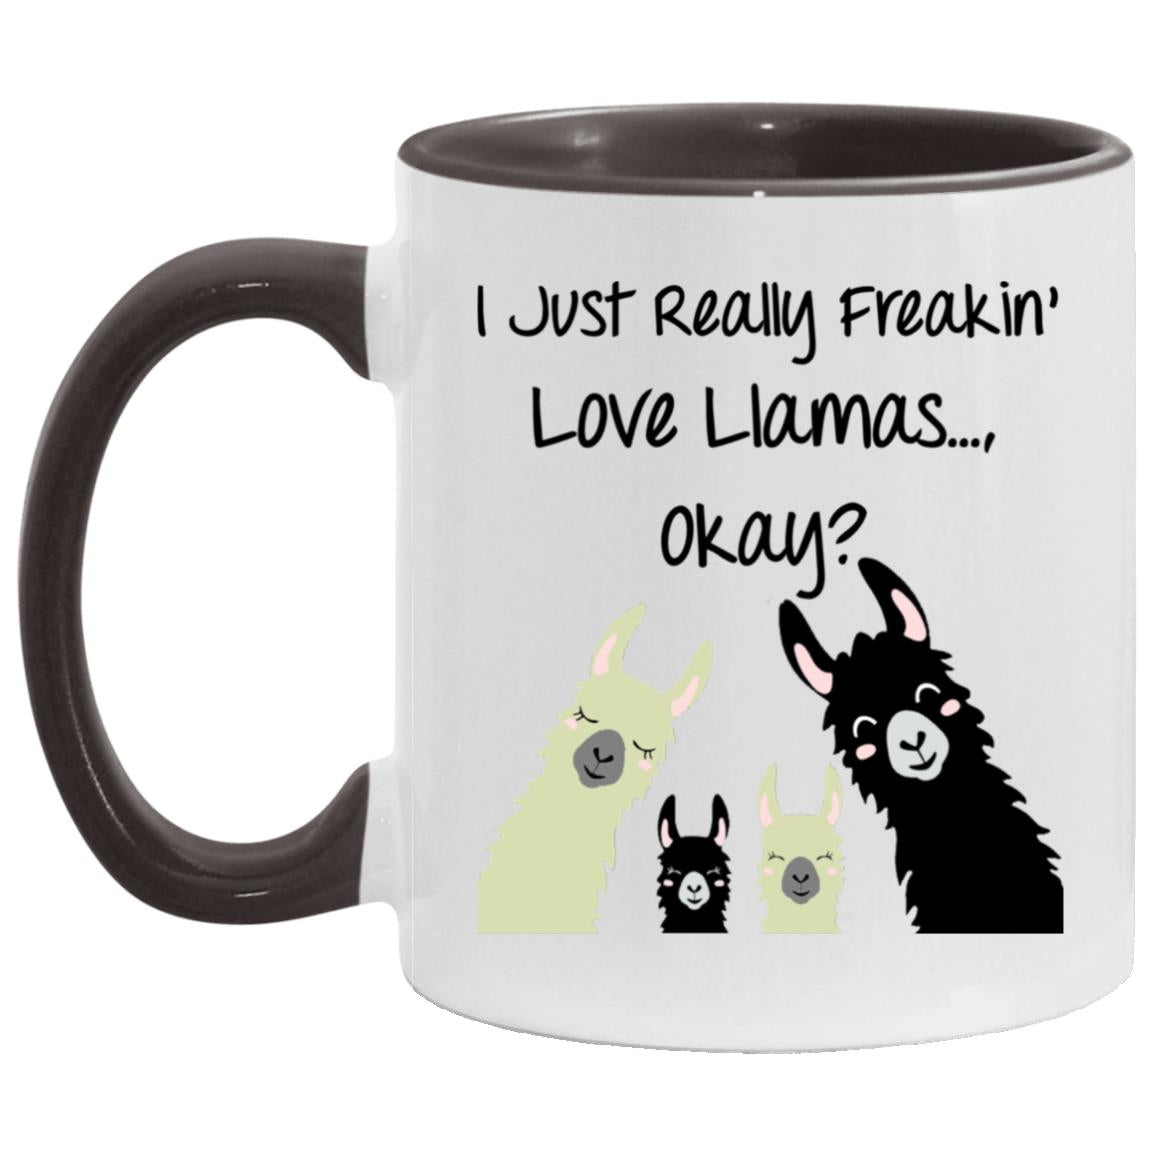 I Love LLamas Mug